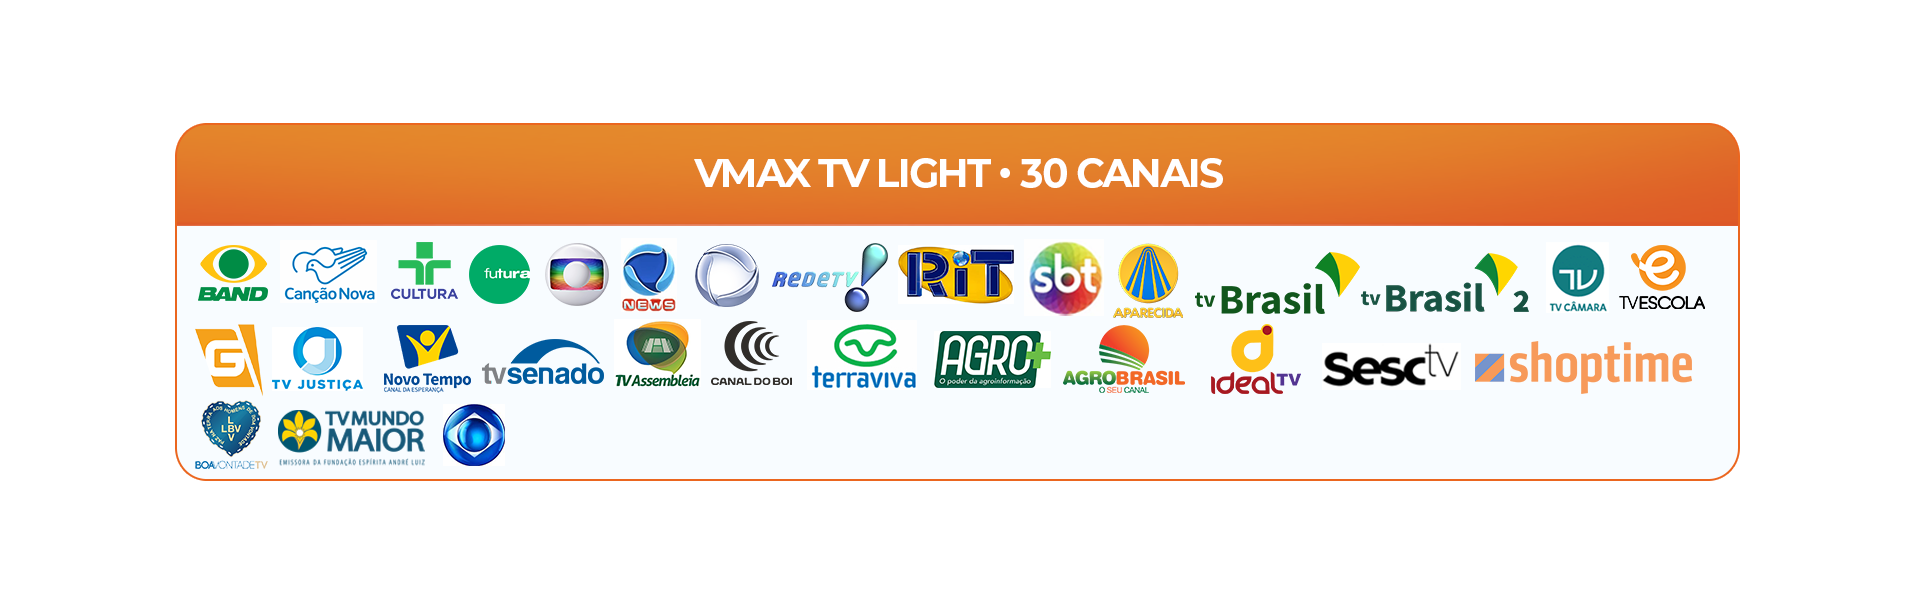 VMAX TV LIGHT